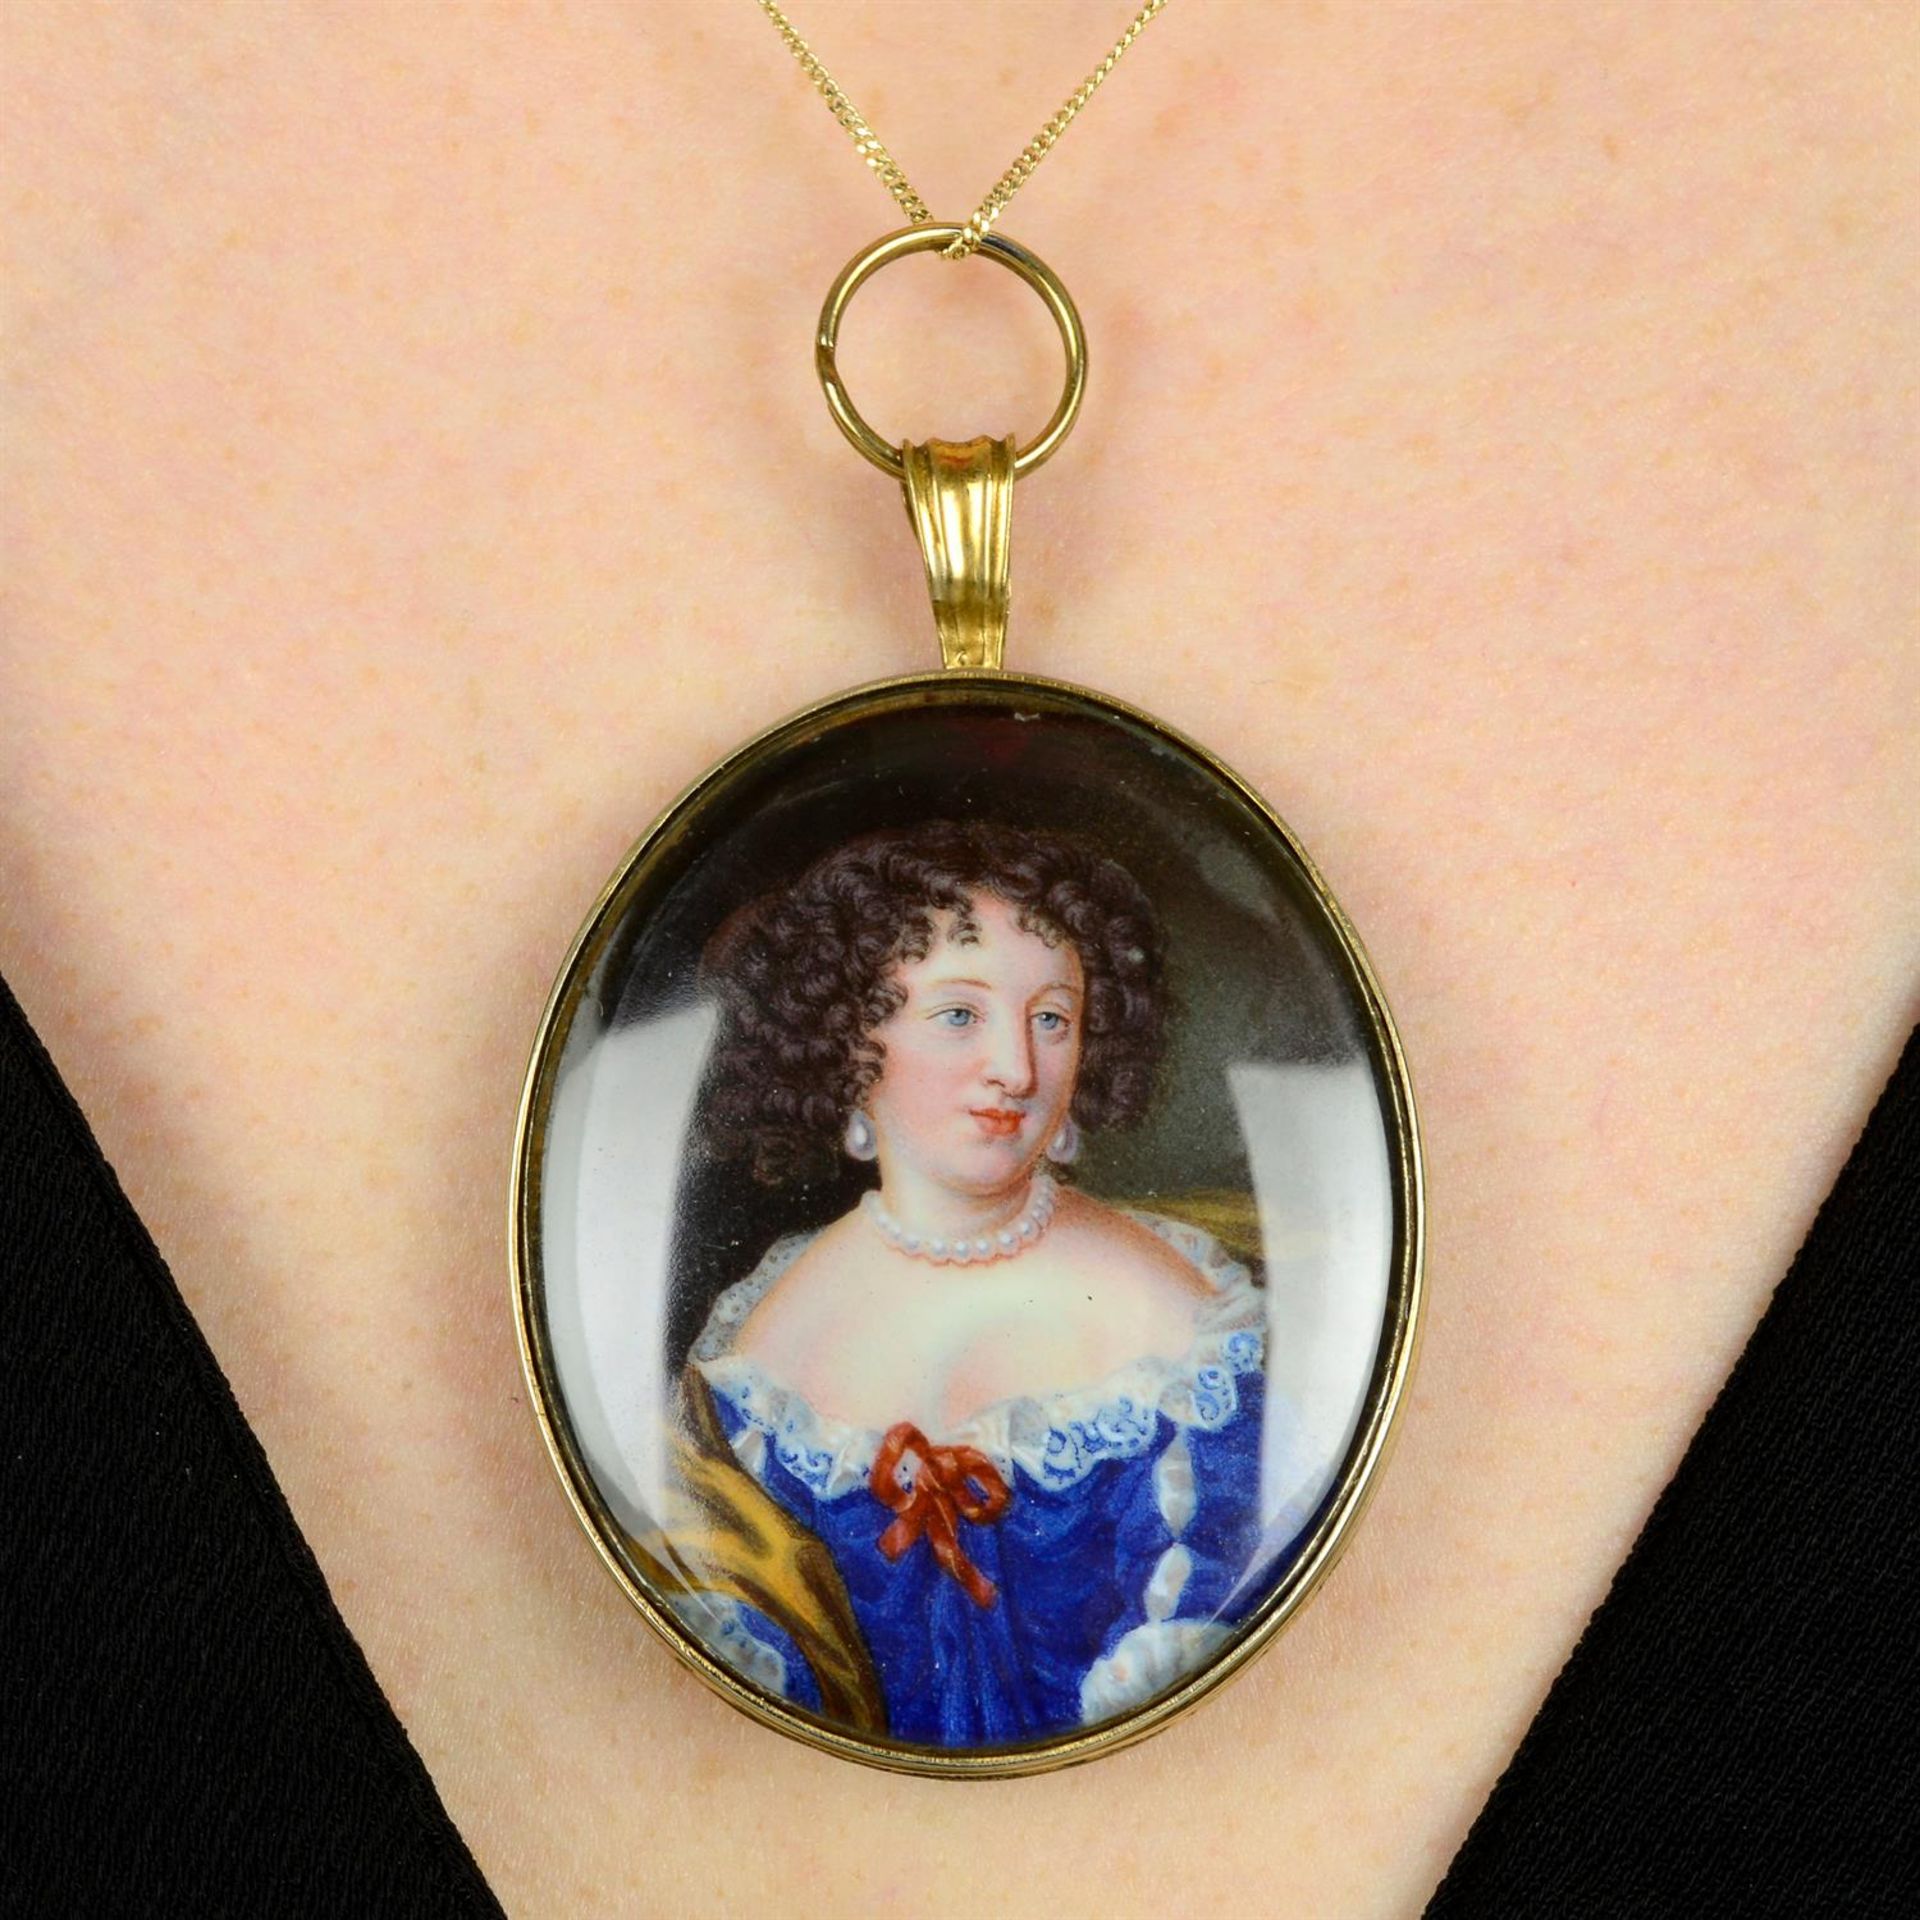 A 19th century portrait miniature pendant, depicting a lady in blue dress.